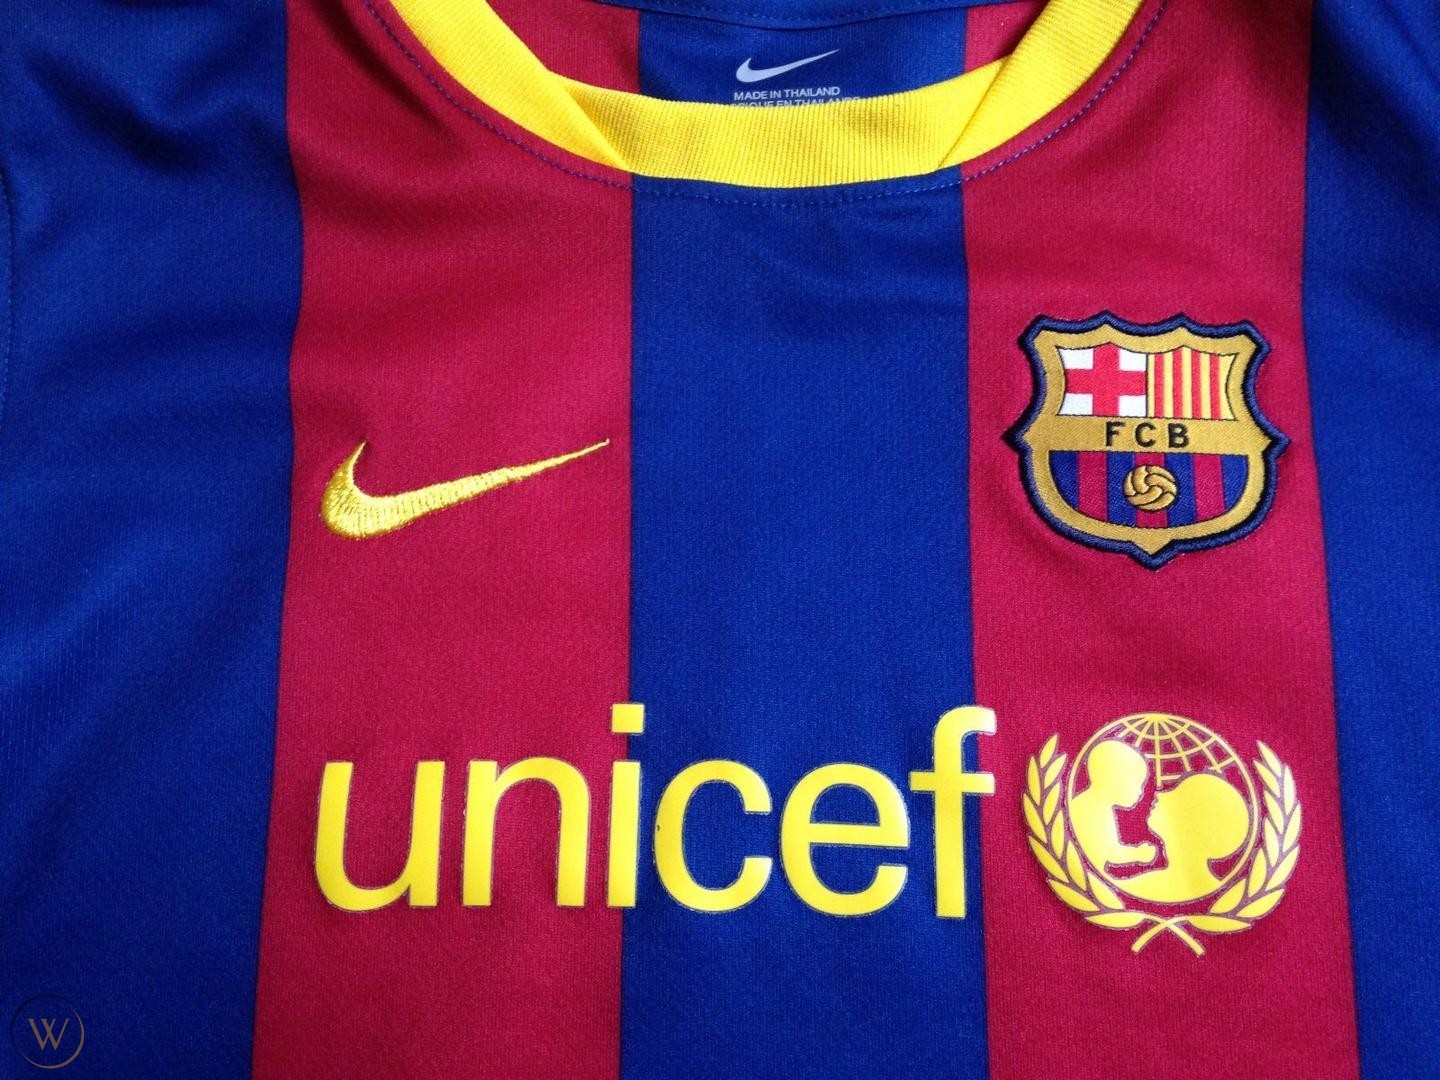 Bijdrage Aubergine Geneigd zijn Barcelona to replace UNICEF on shirts with UN refugee charity - Football  España